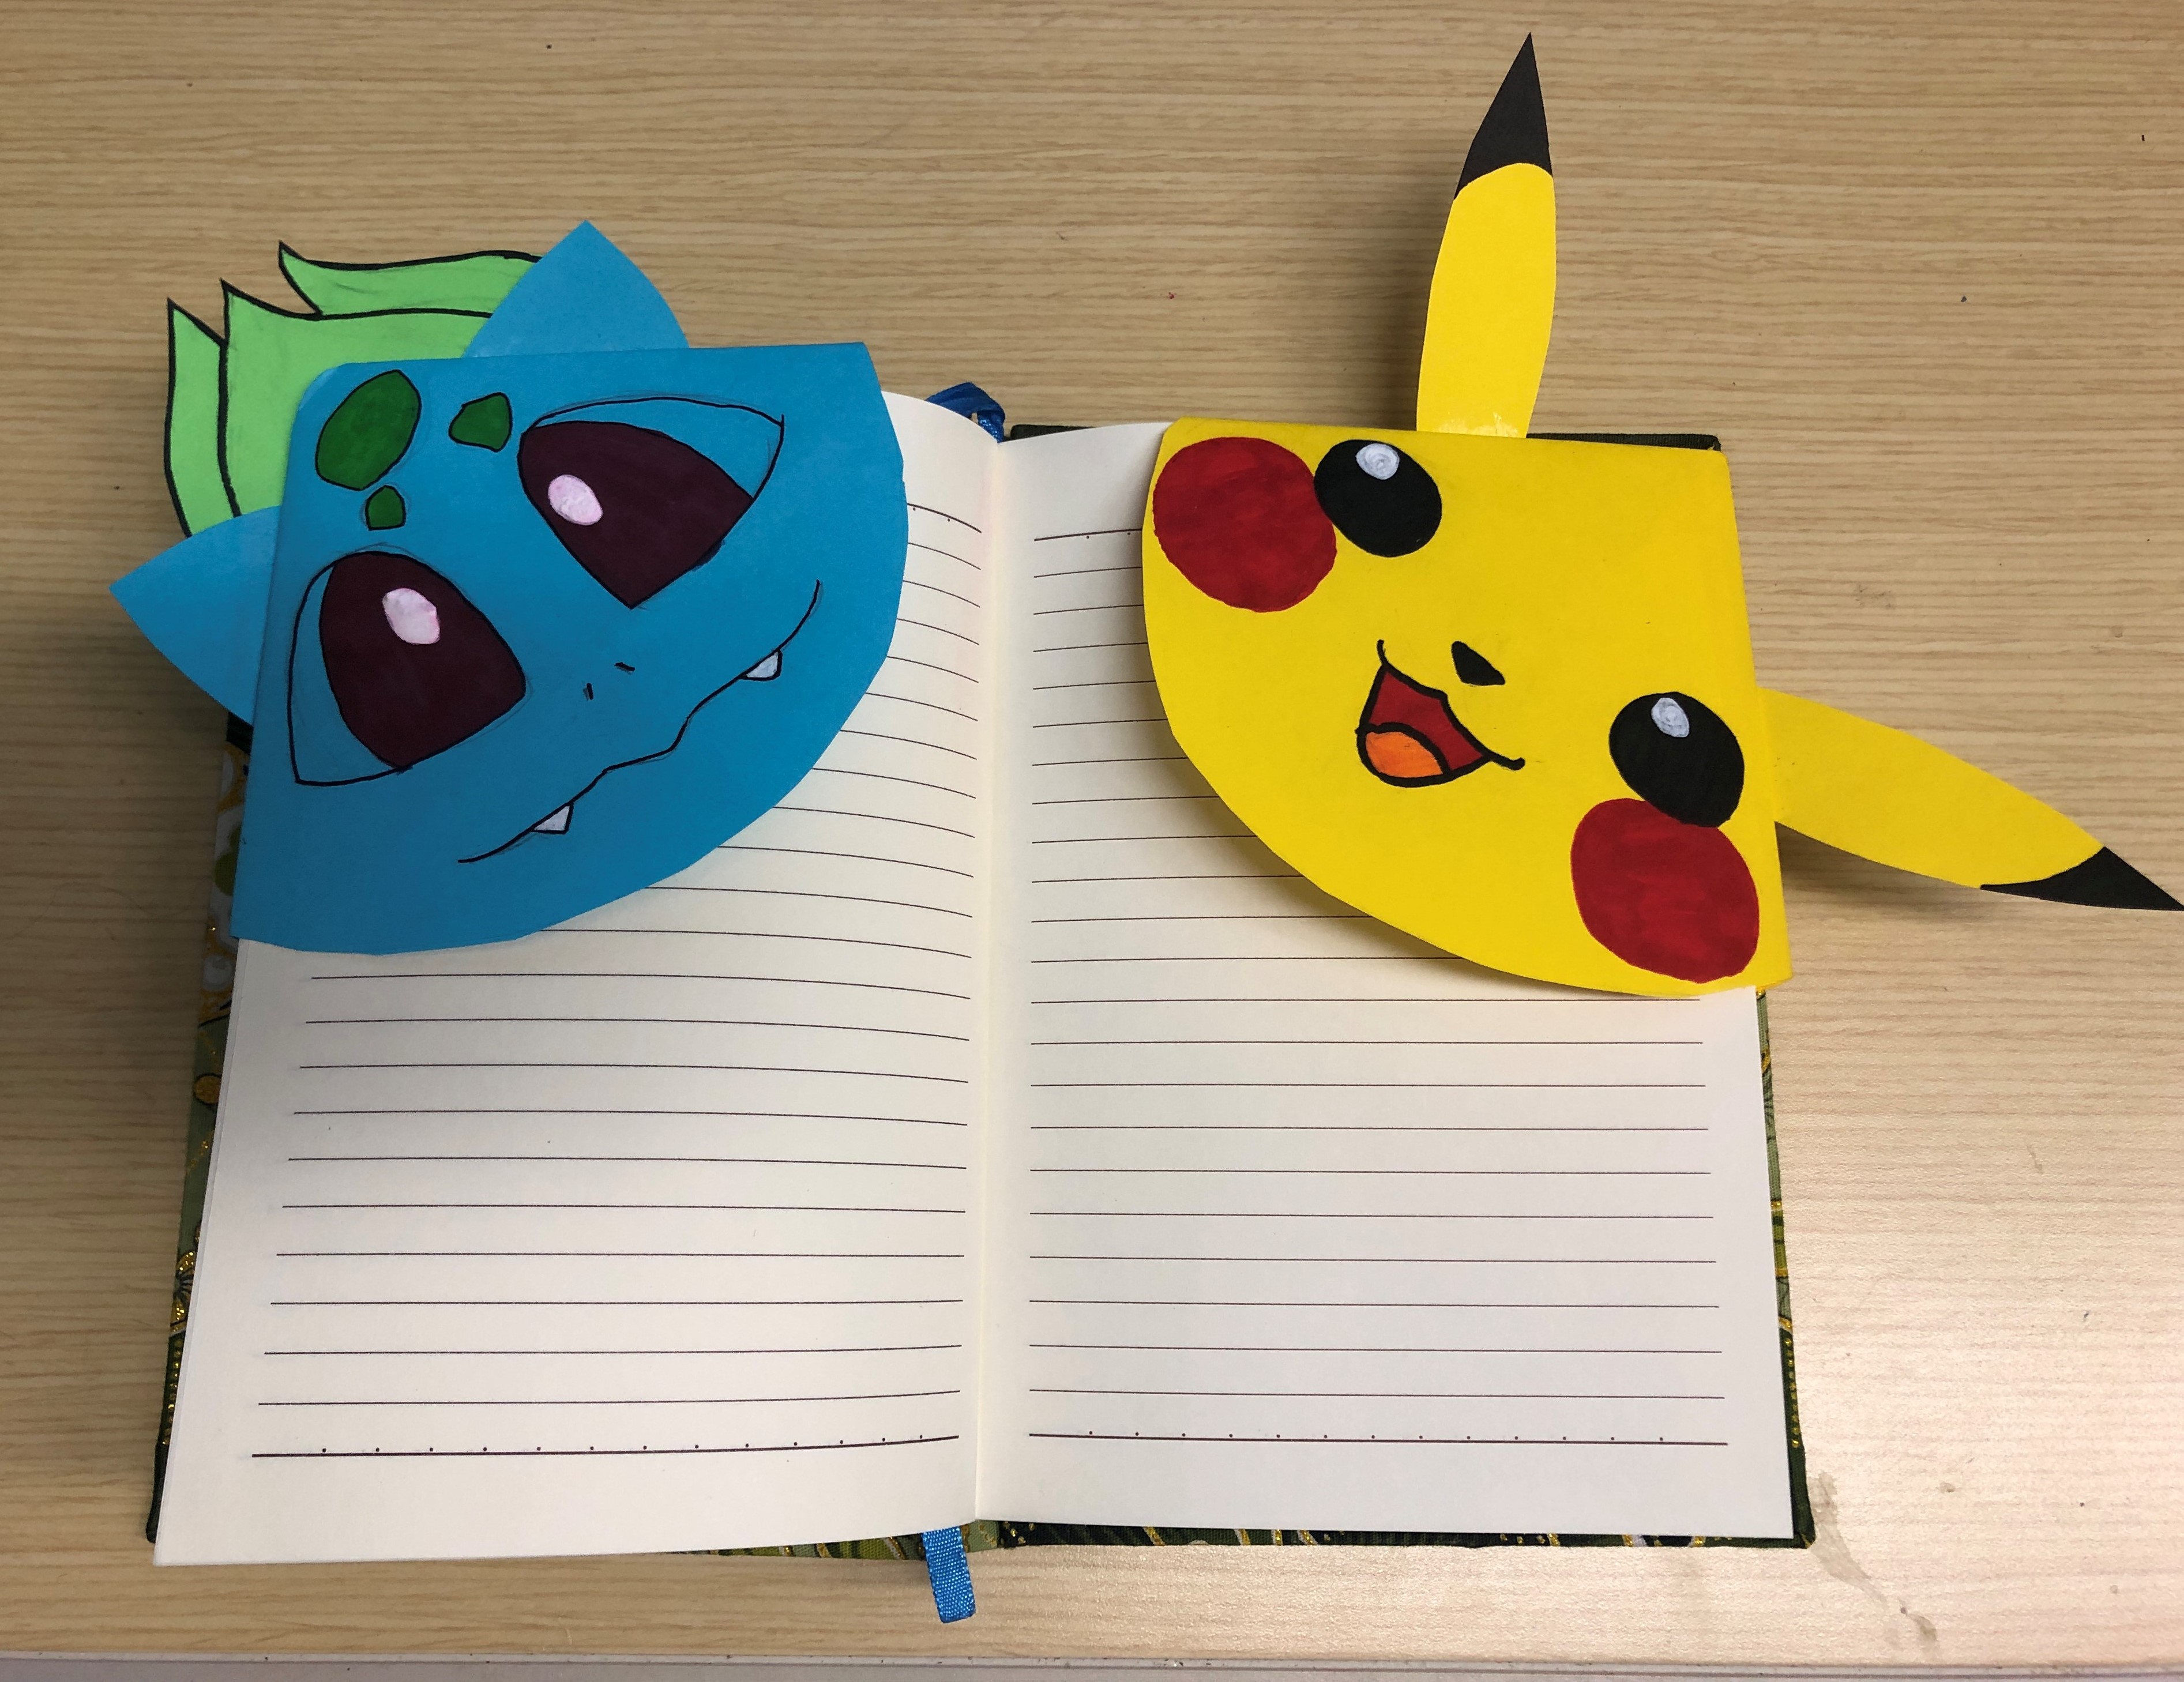 Origami of cartoon animals (pokemon) on a notebook